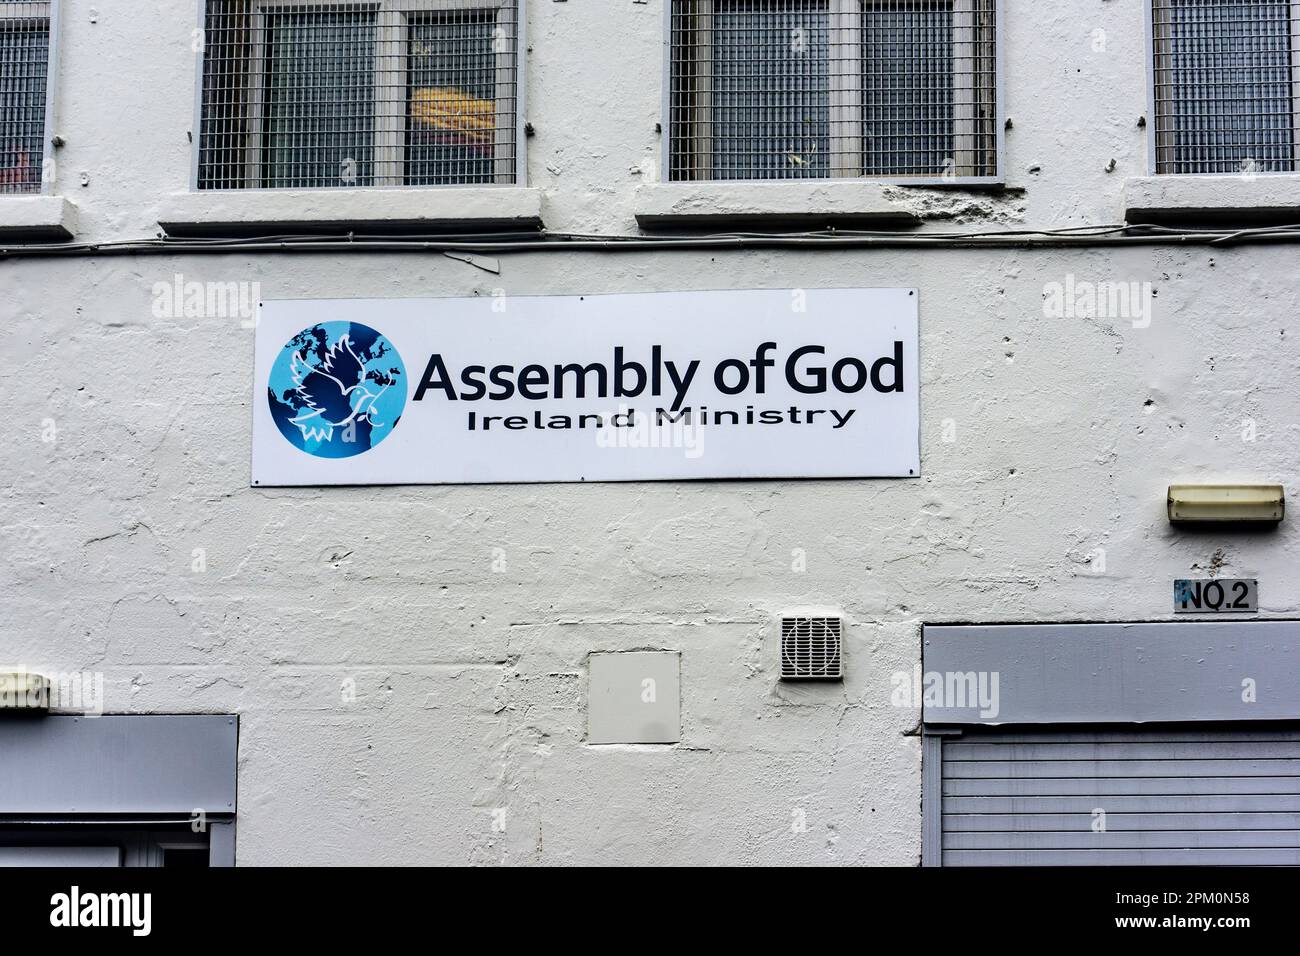 Segnaletica per l'Assemblea di Dio, Ministry Madureira, Rutland Place, Dublino, Irlanda. Foto Stock